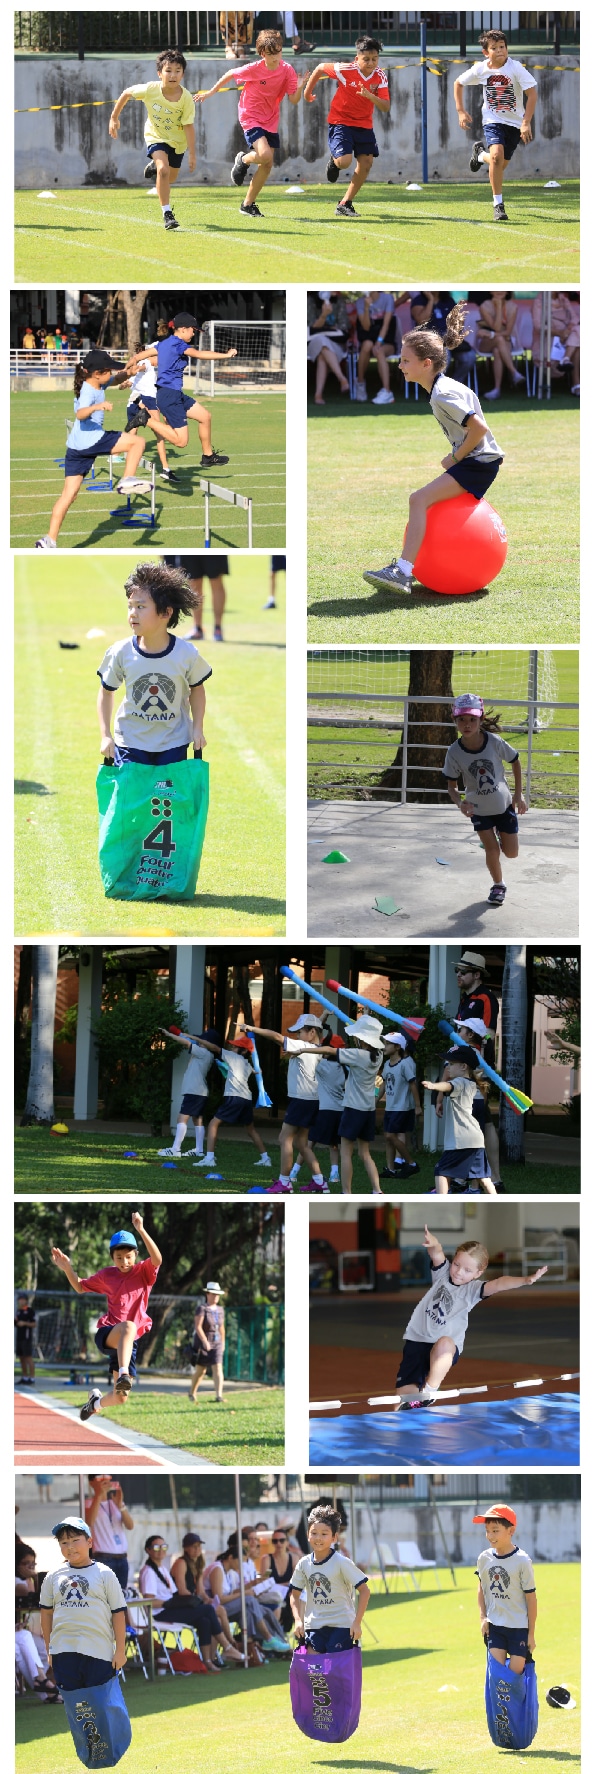 KS students enjoy Sports Day activities